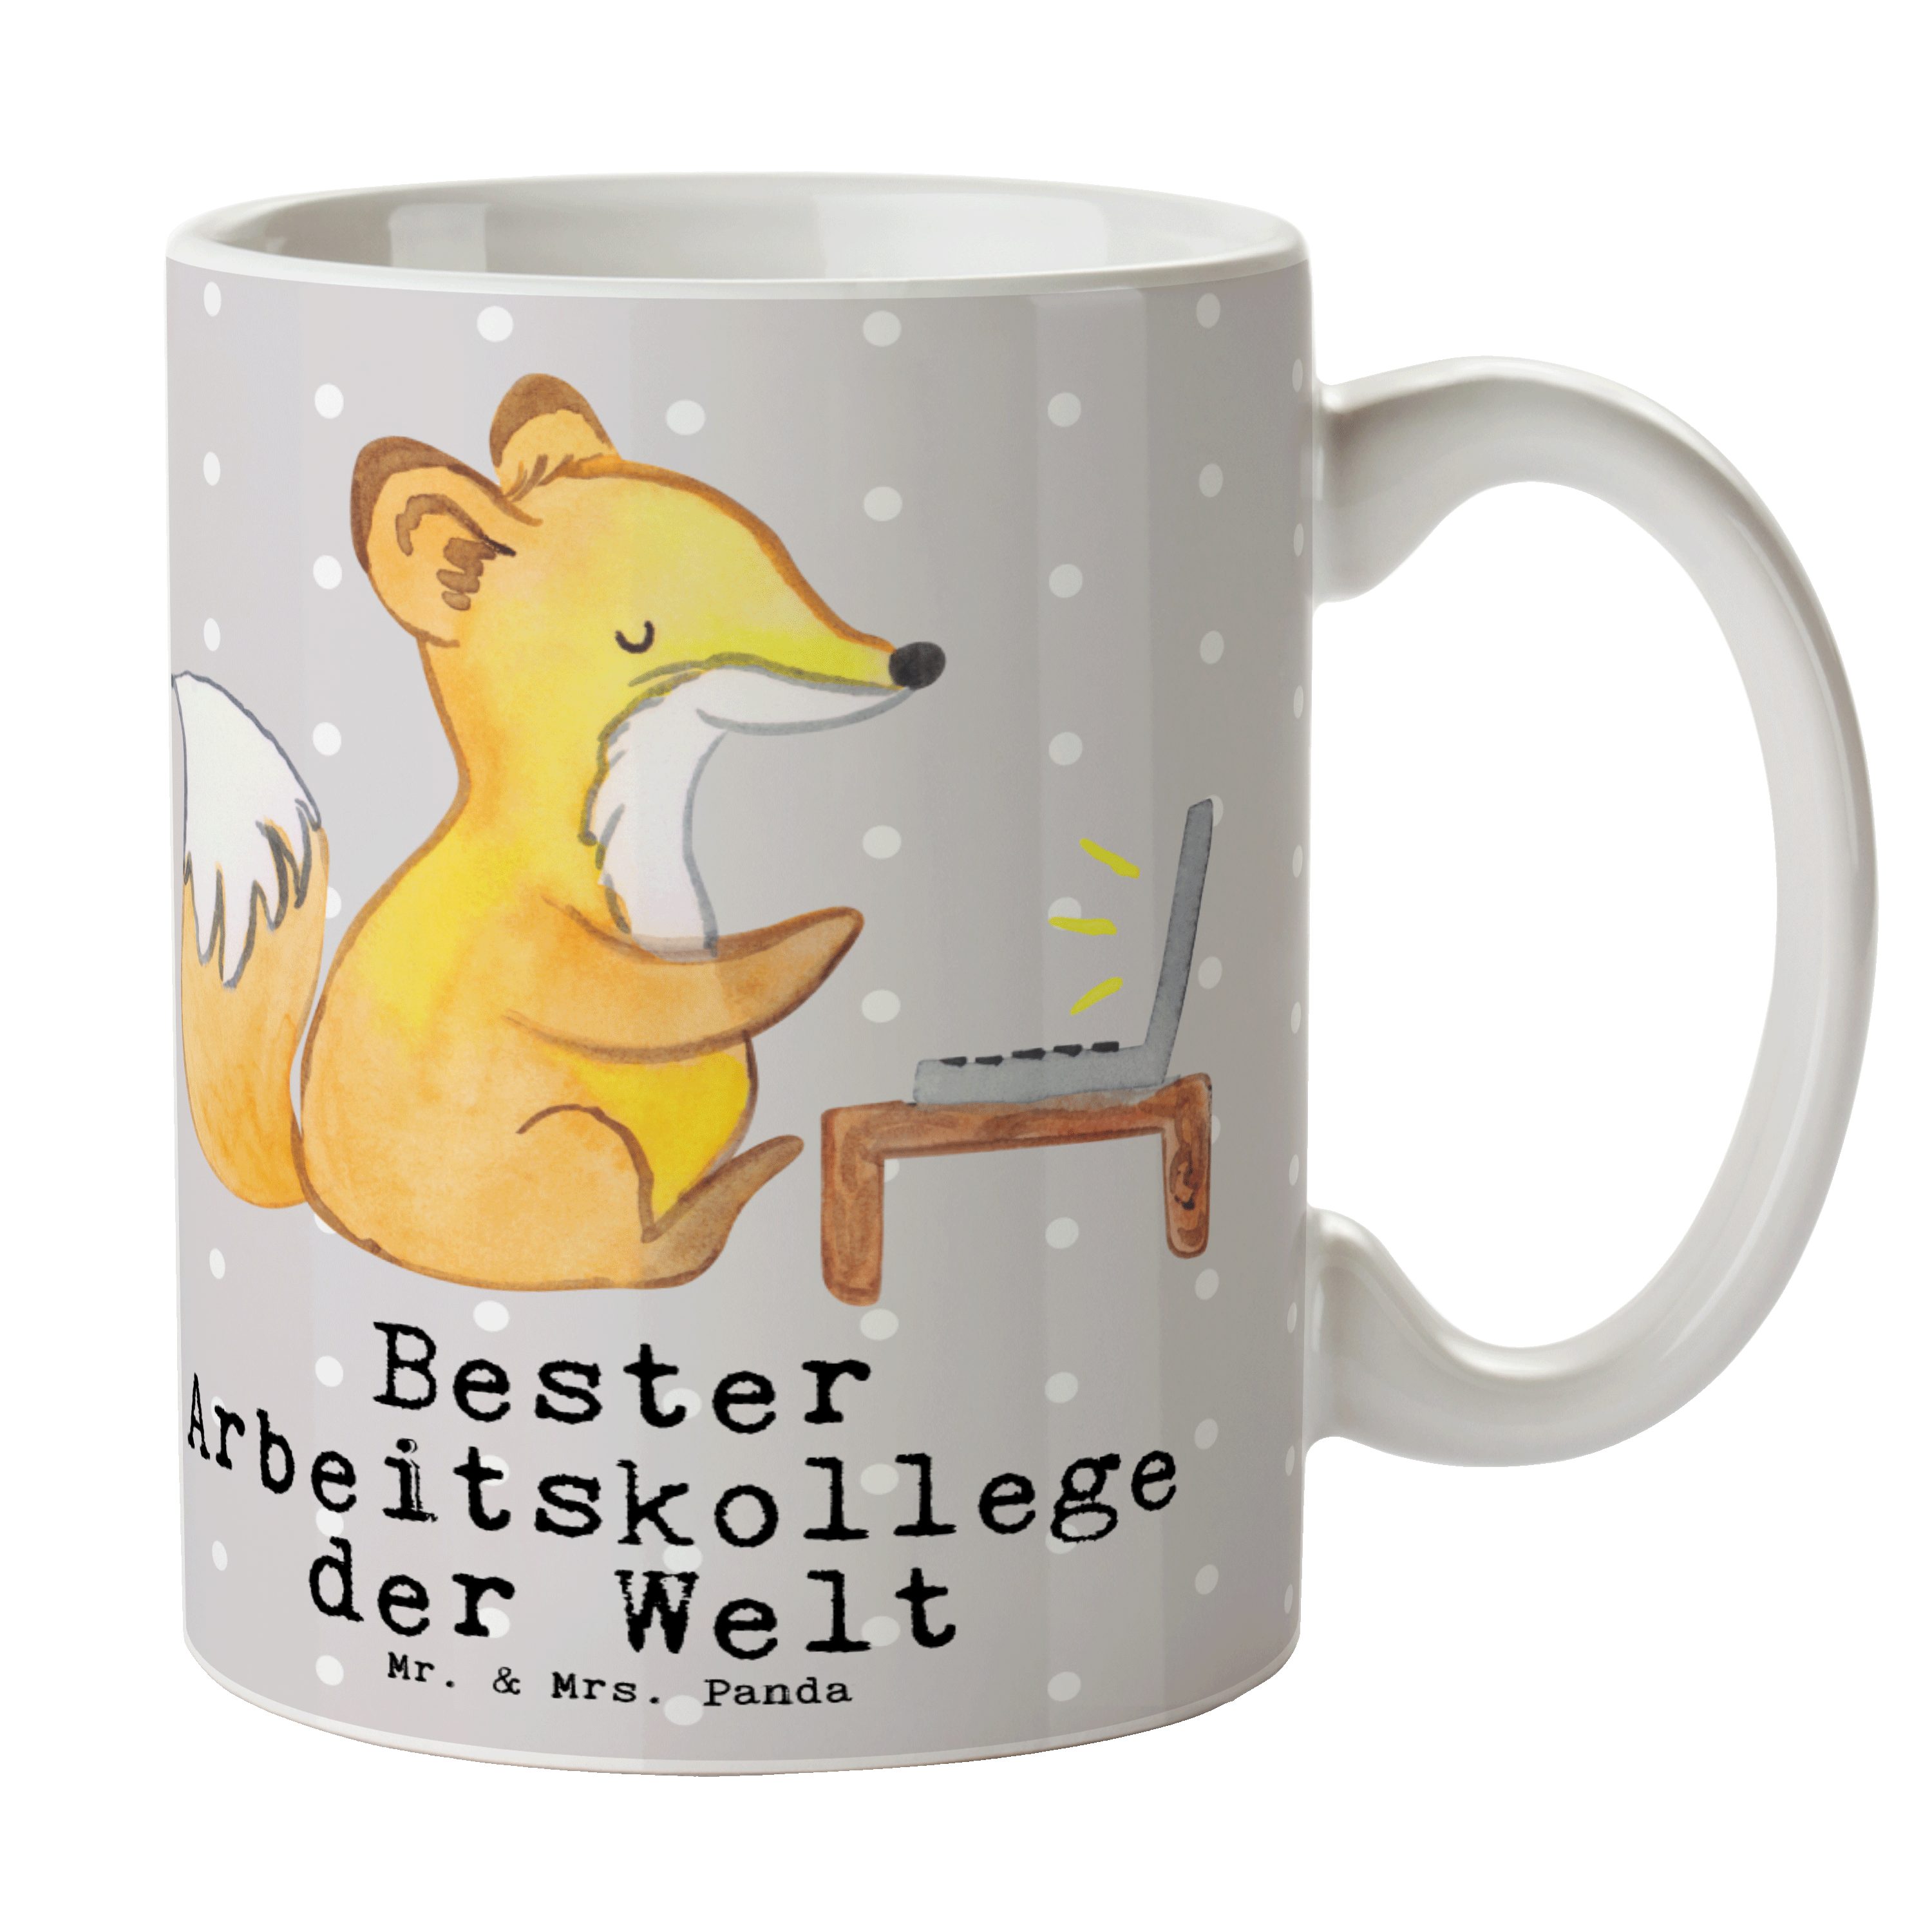 Mr. & Mrs. Panda Tasse Fuchs Bester Arbeitskollege der Welt - Grau Pastell - Geschenk, Kaffe, Keramik